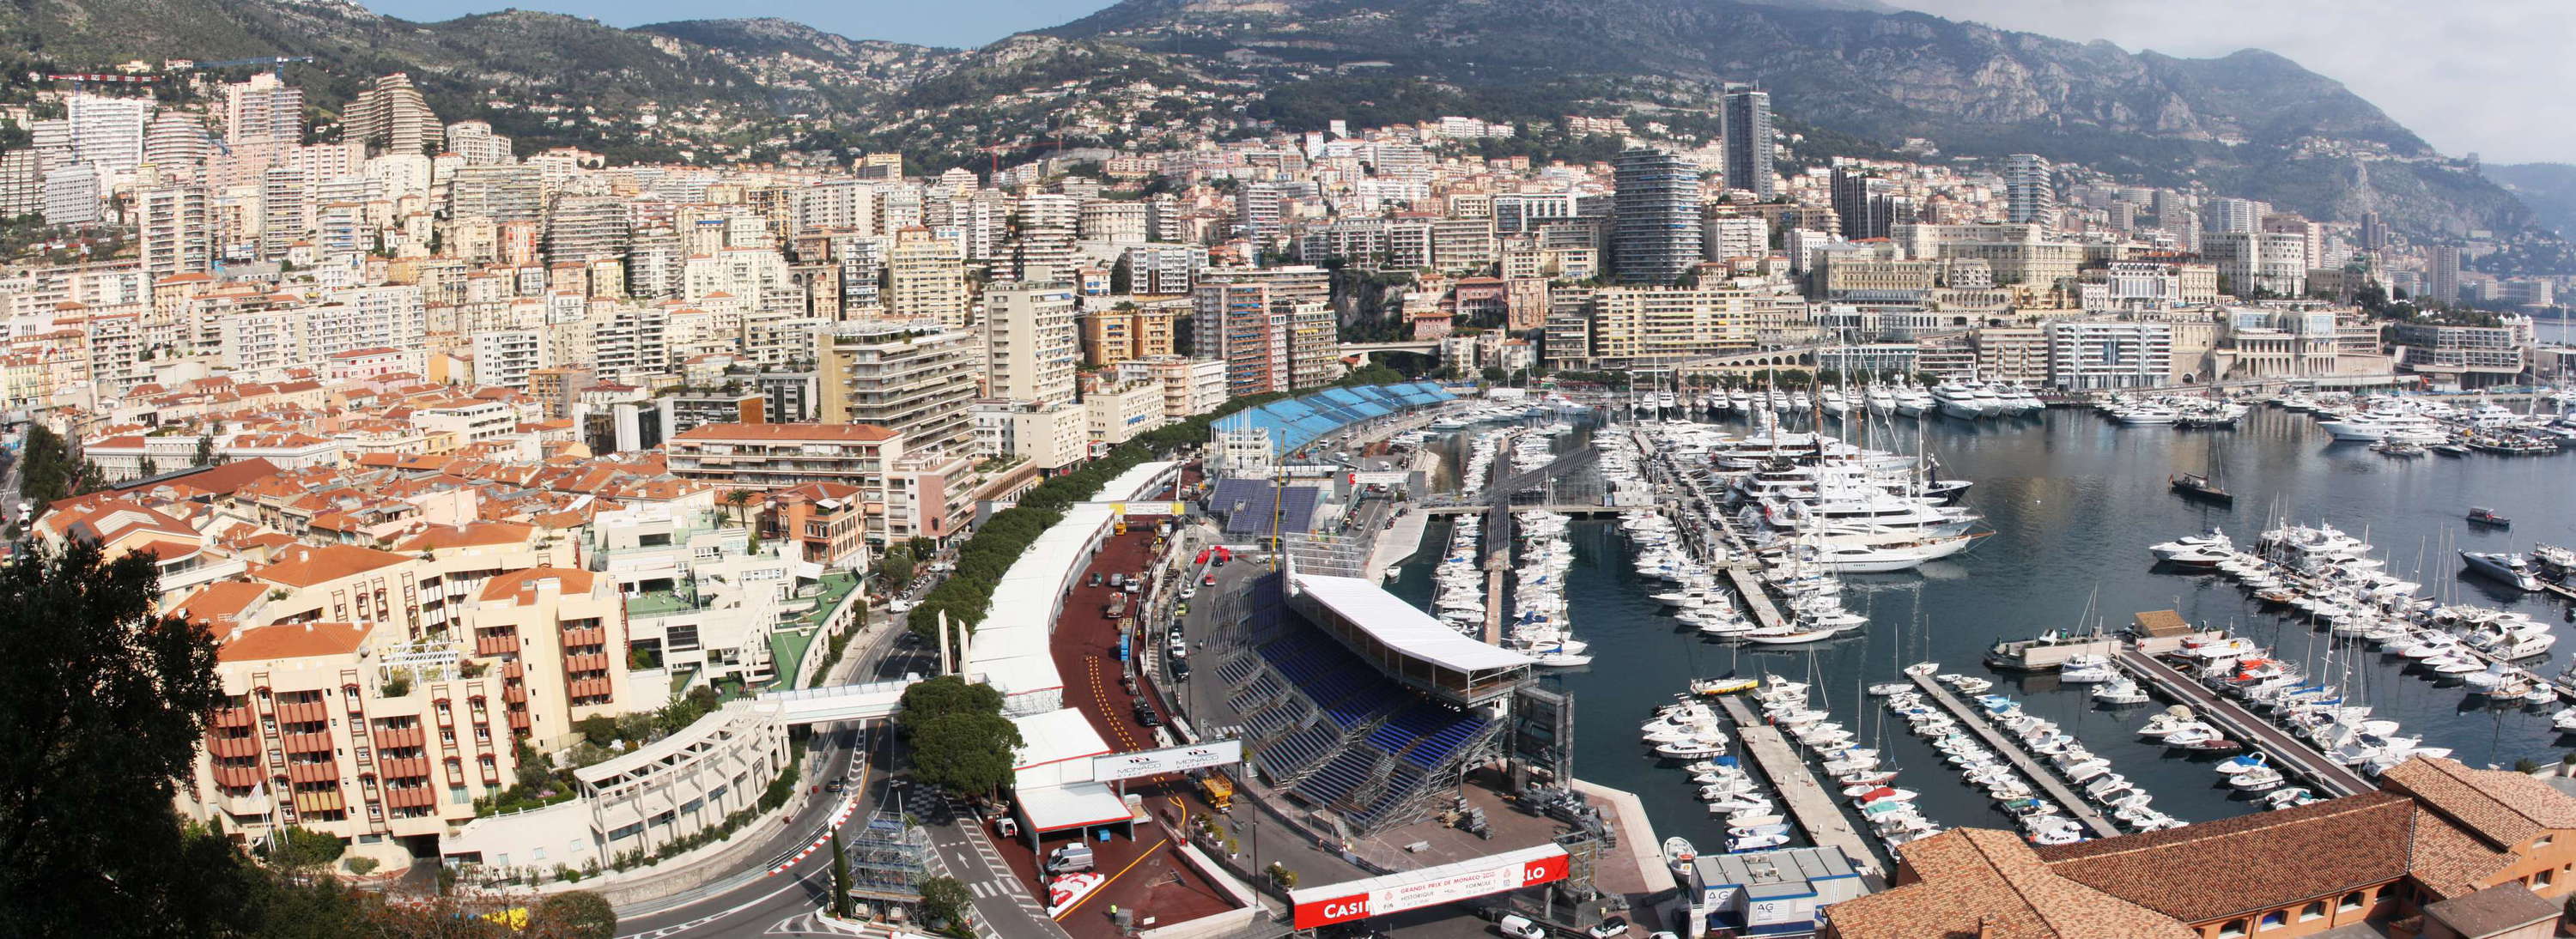 Monaco with Port Hercule